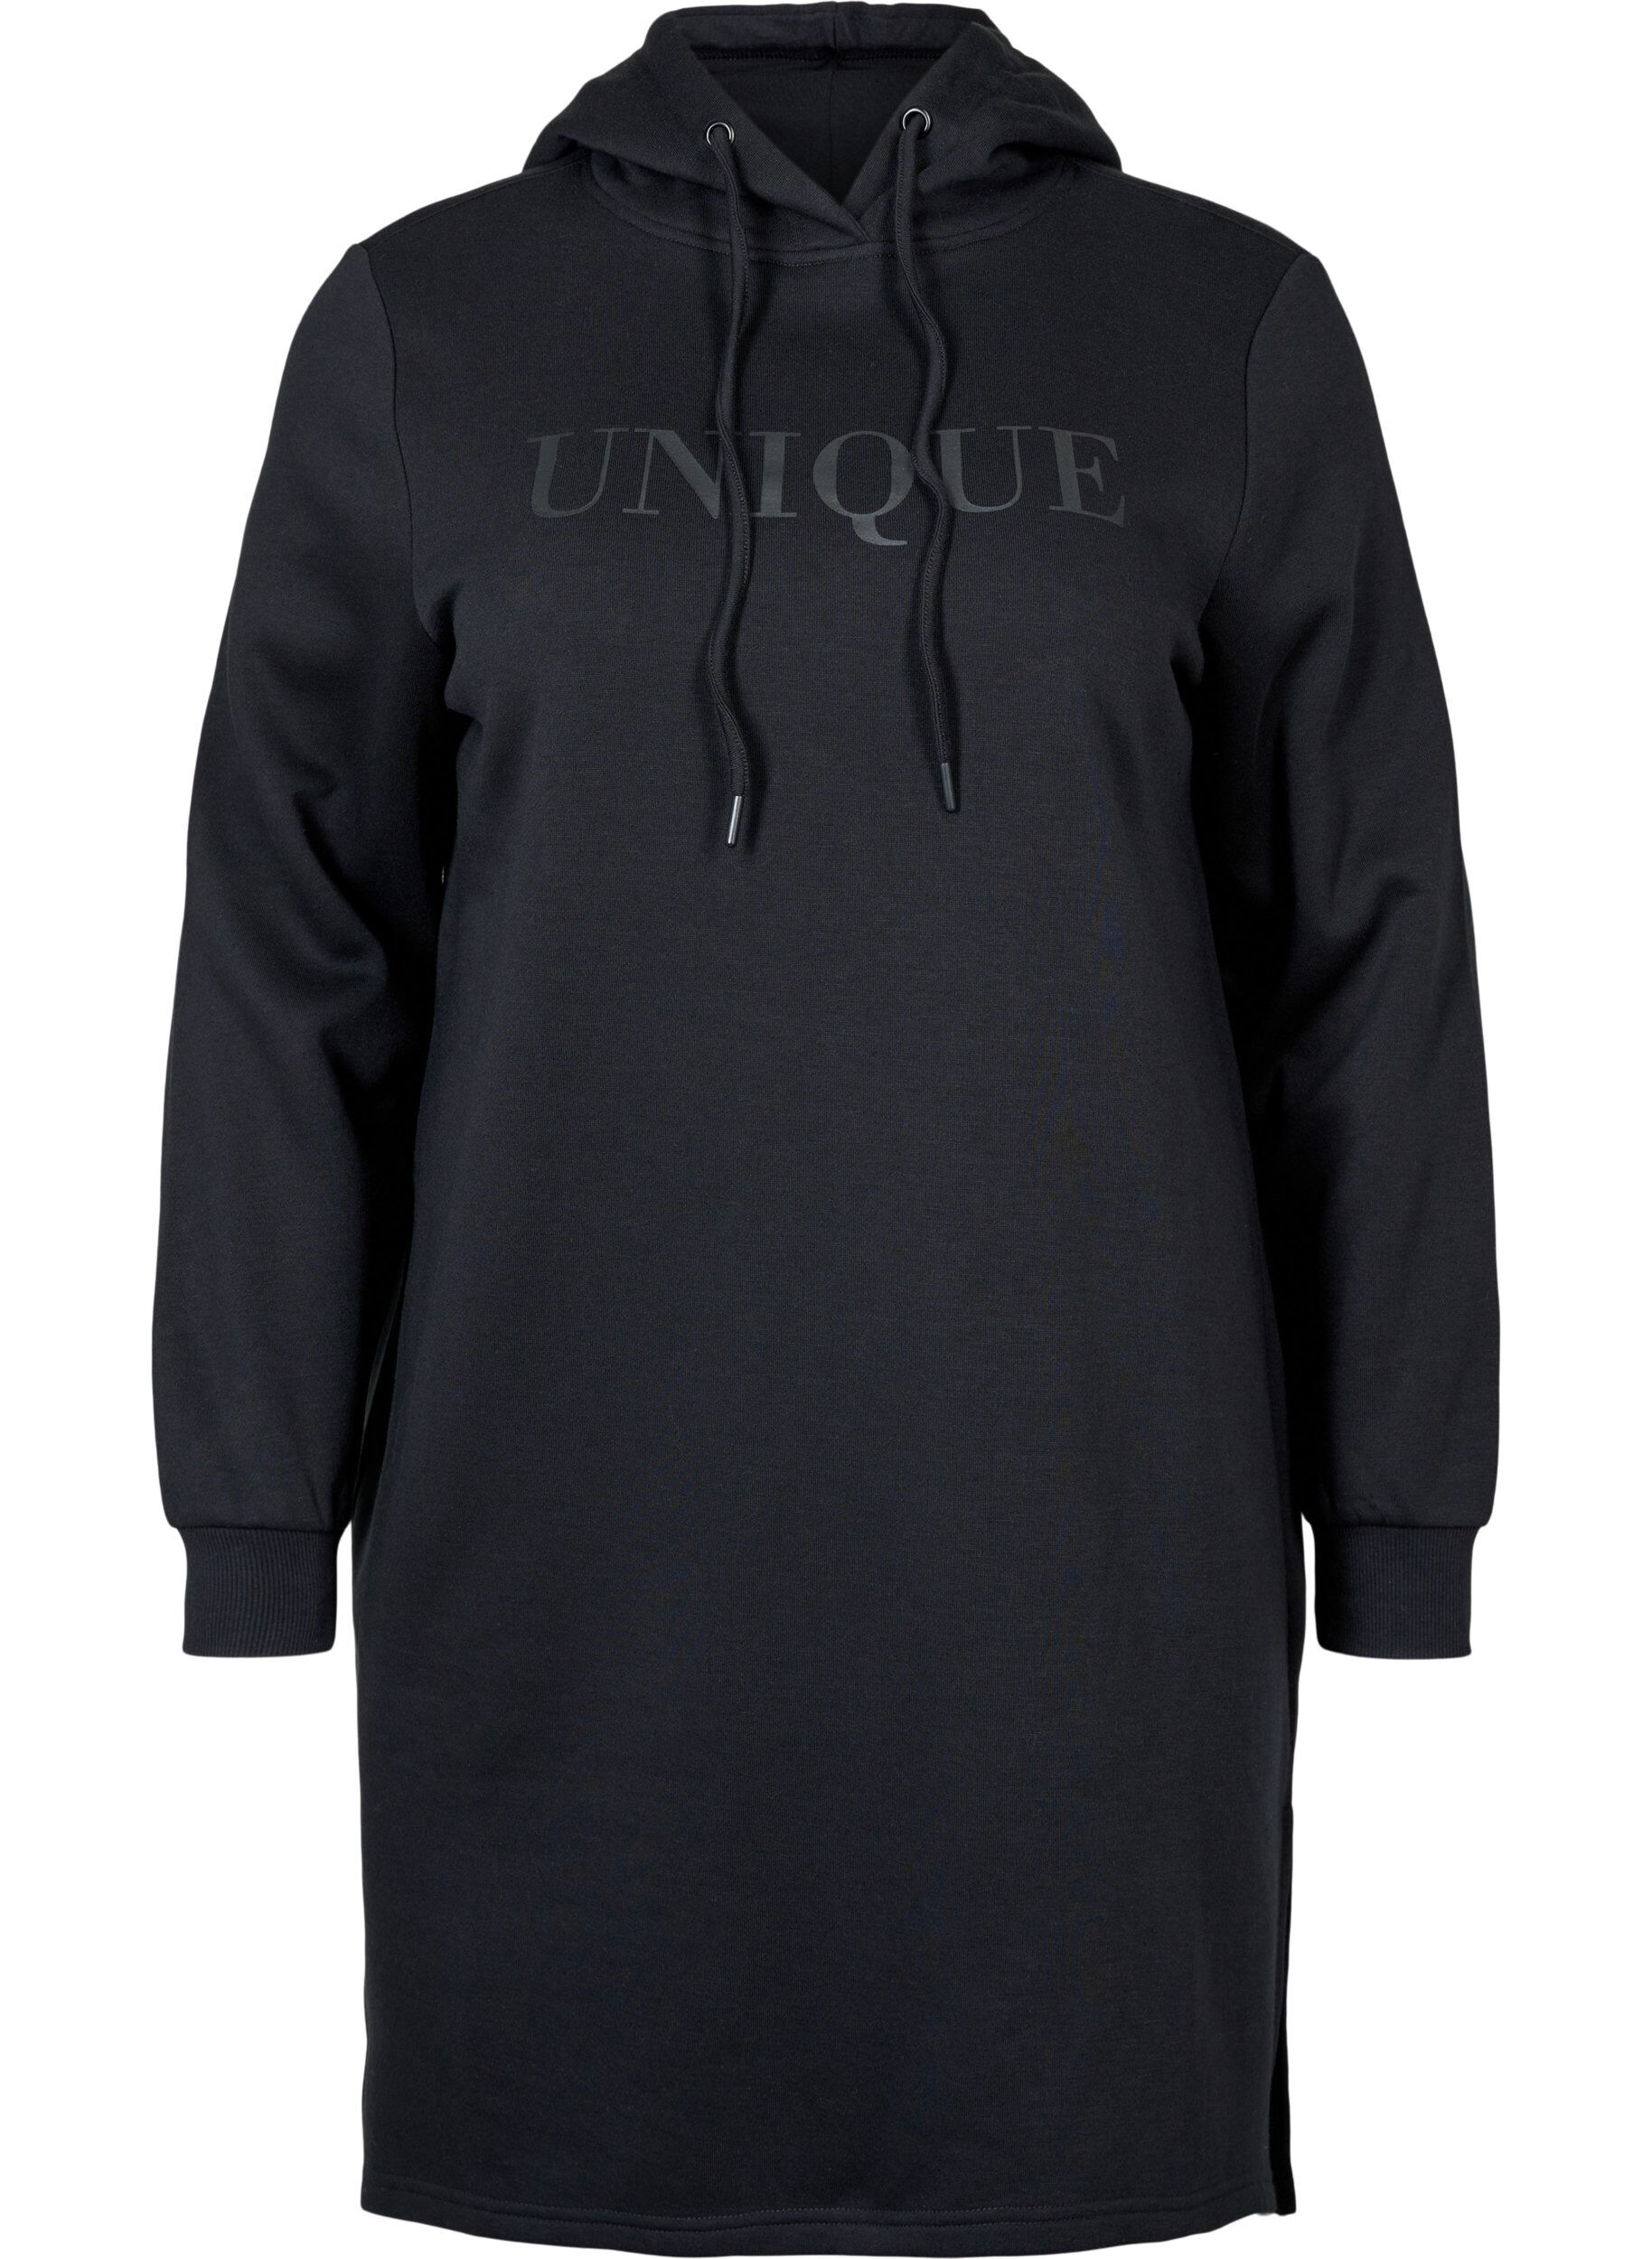 Sweatshirt dress with hood and slit - Black - Sz. 42-60 - Zizzifashion